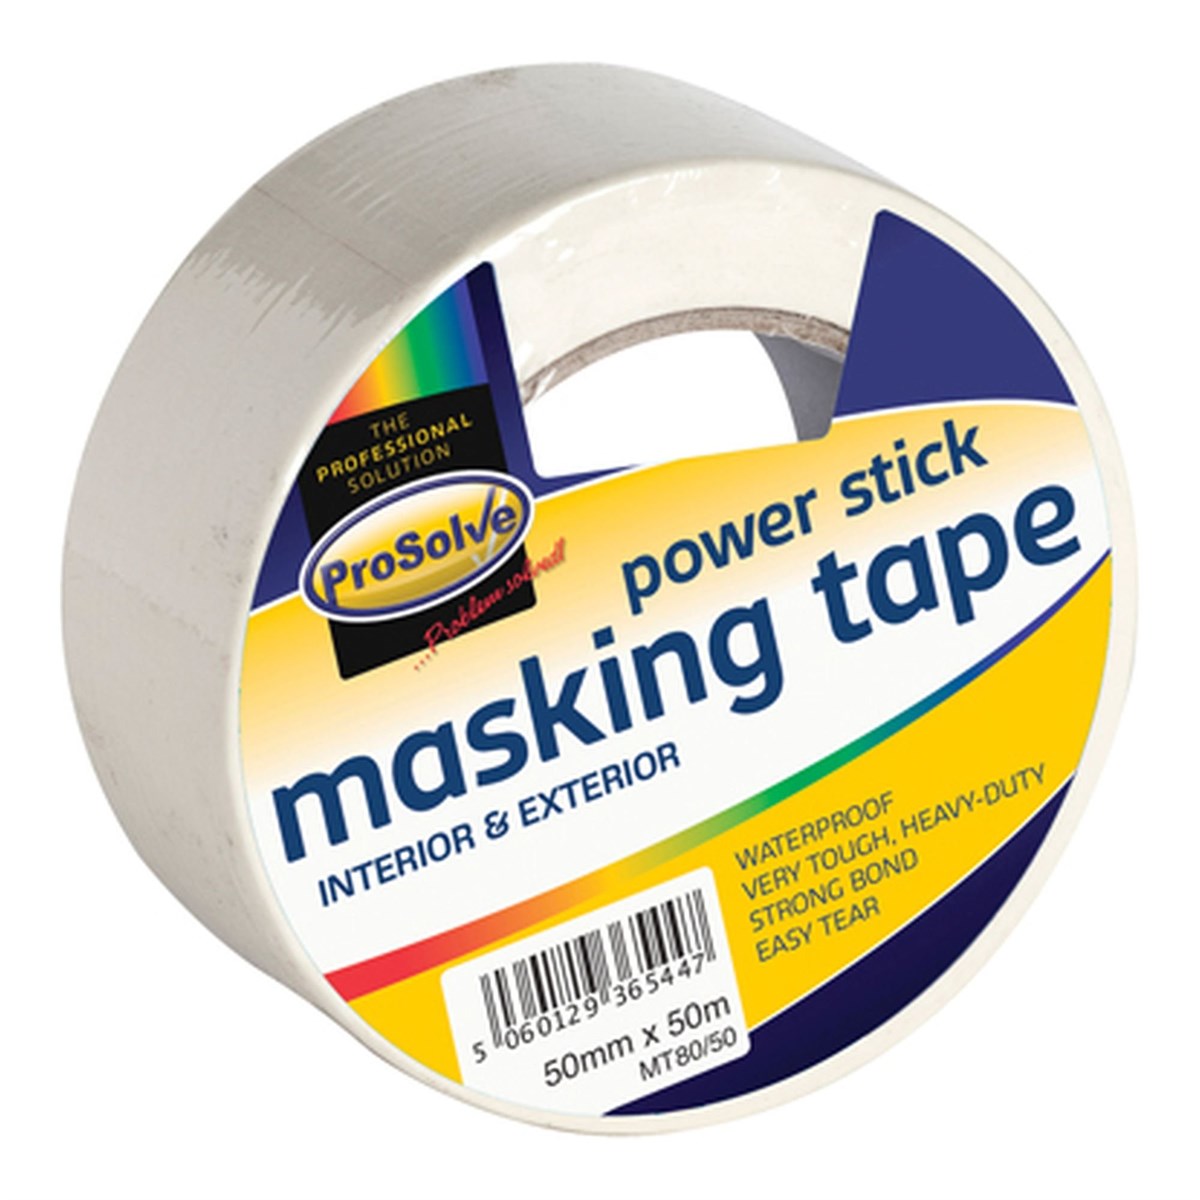 Masking tape 50 mm x 50 m